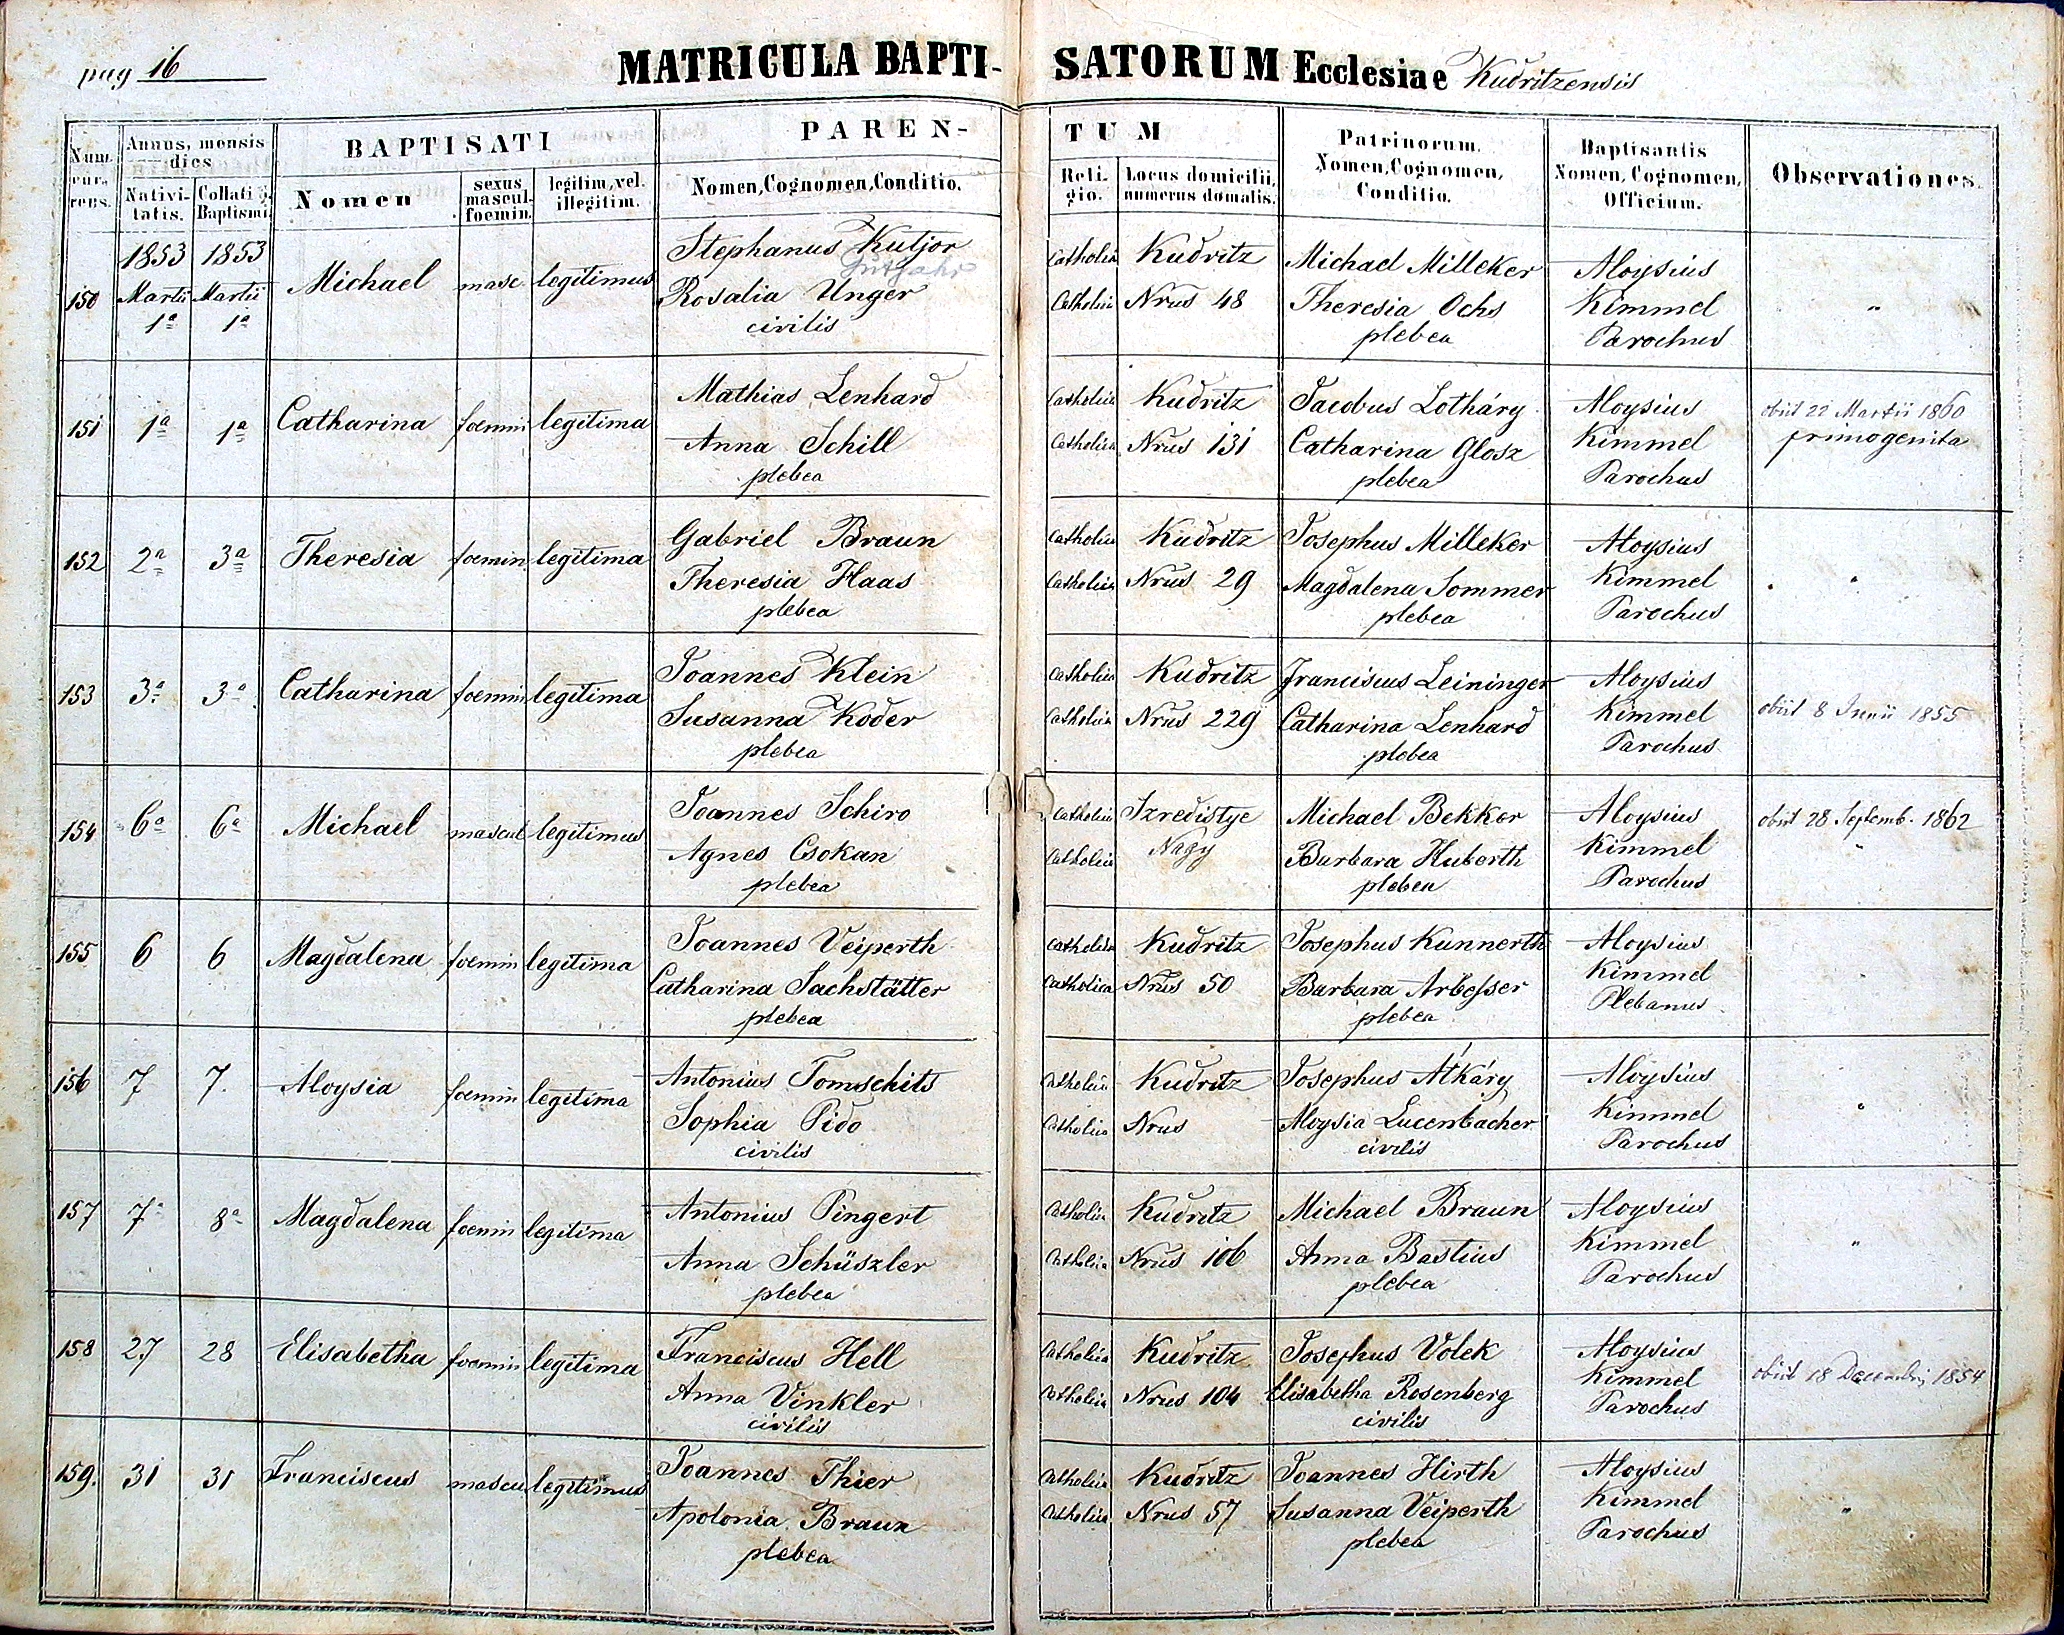 images/church_records/BIRTHS/1852-1870B/016